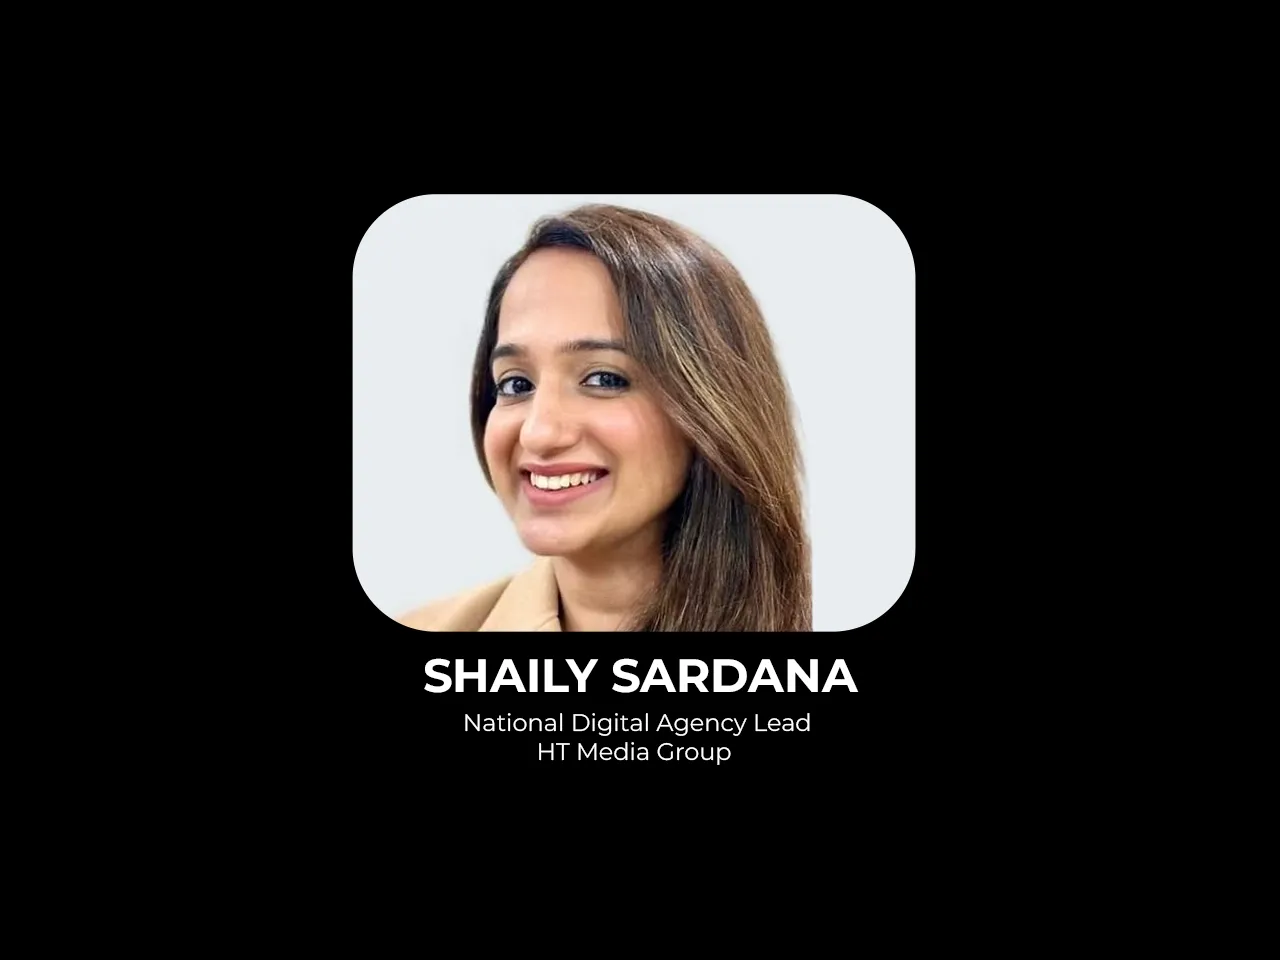 HT Media Group names Shaily Sardana as National Digital Agency Lead